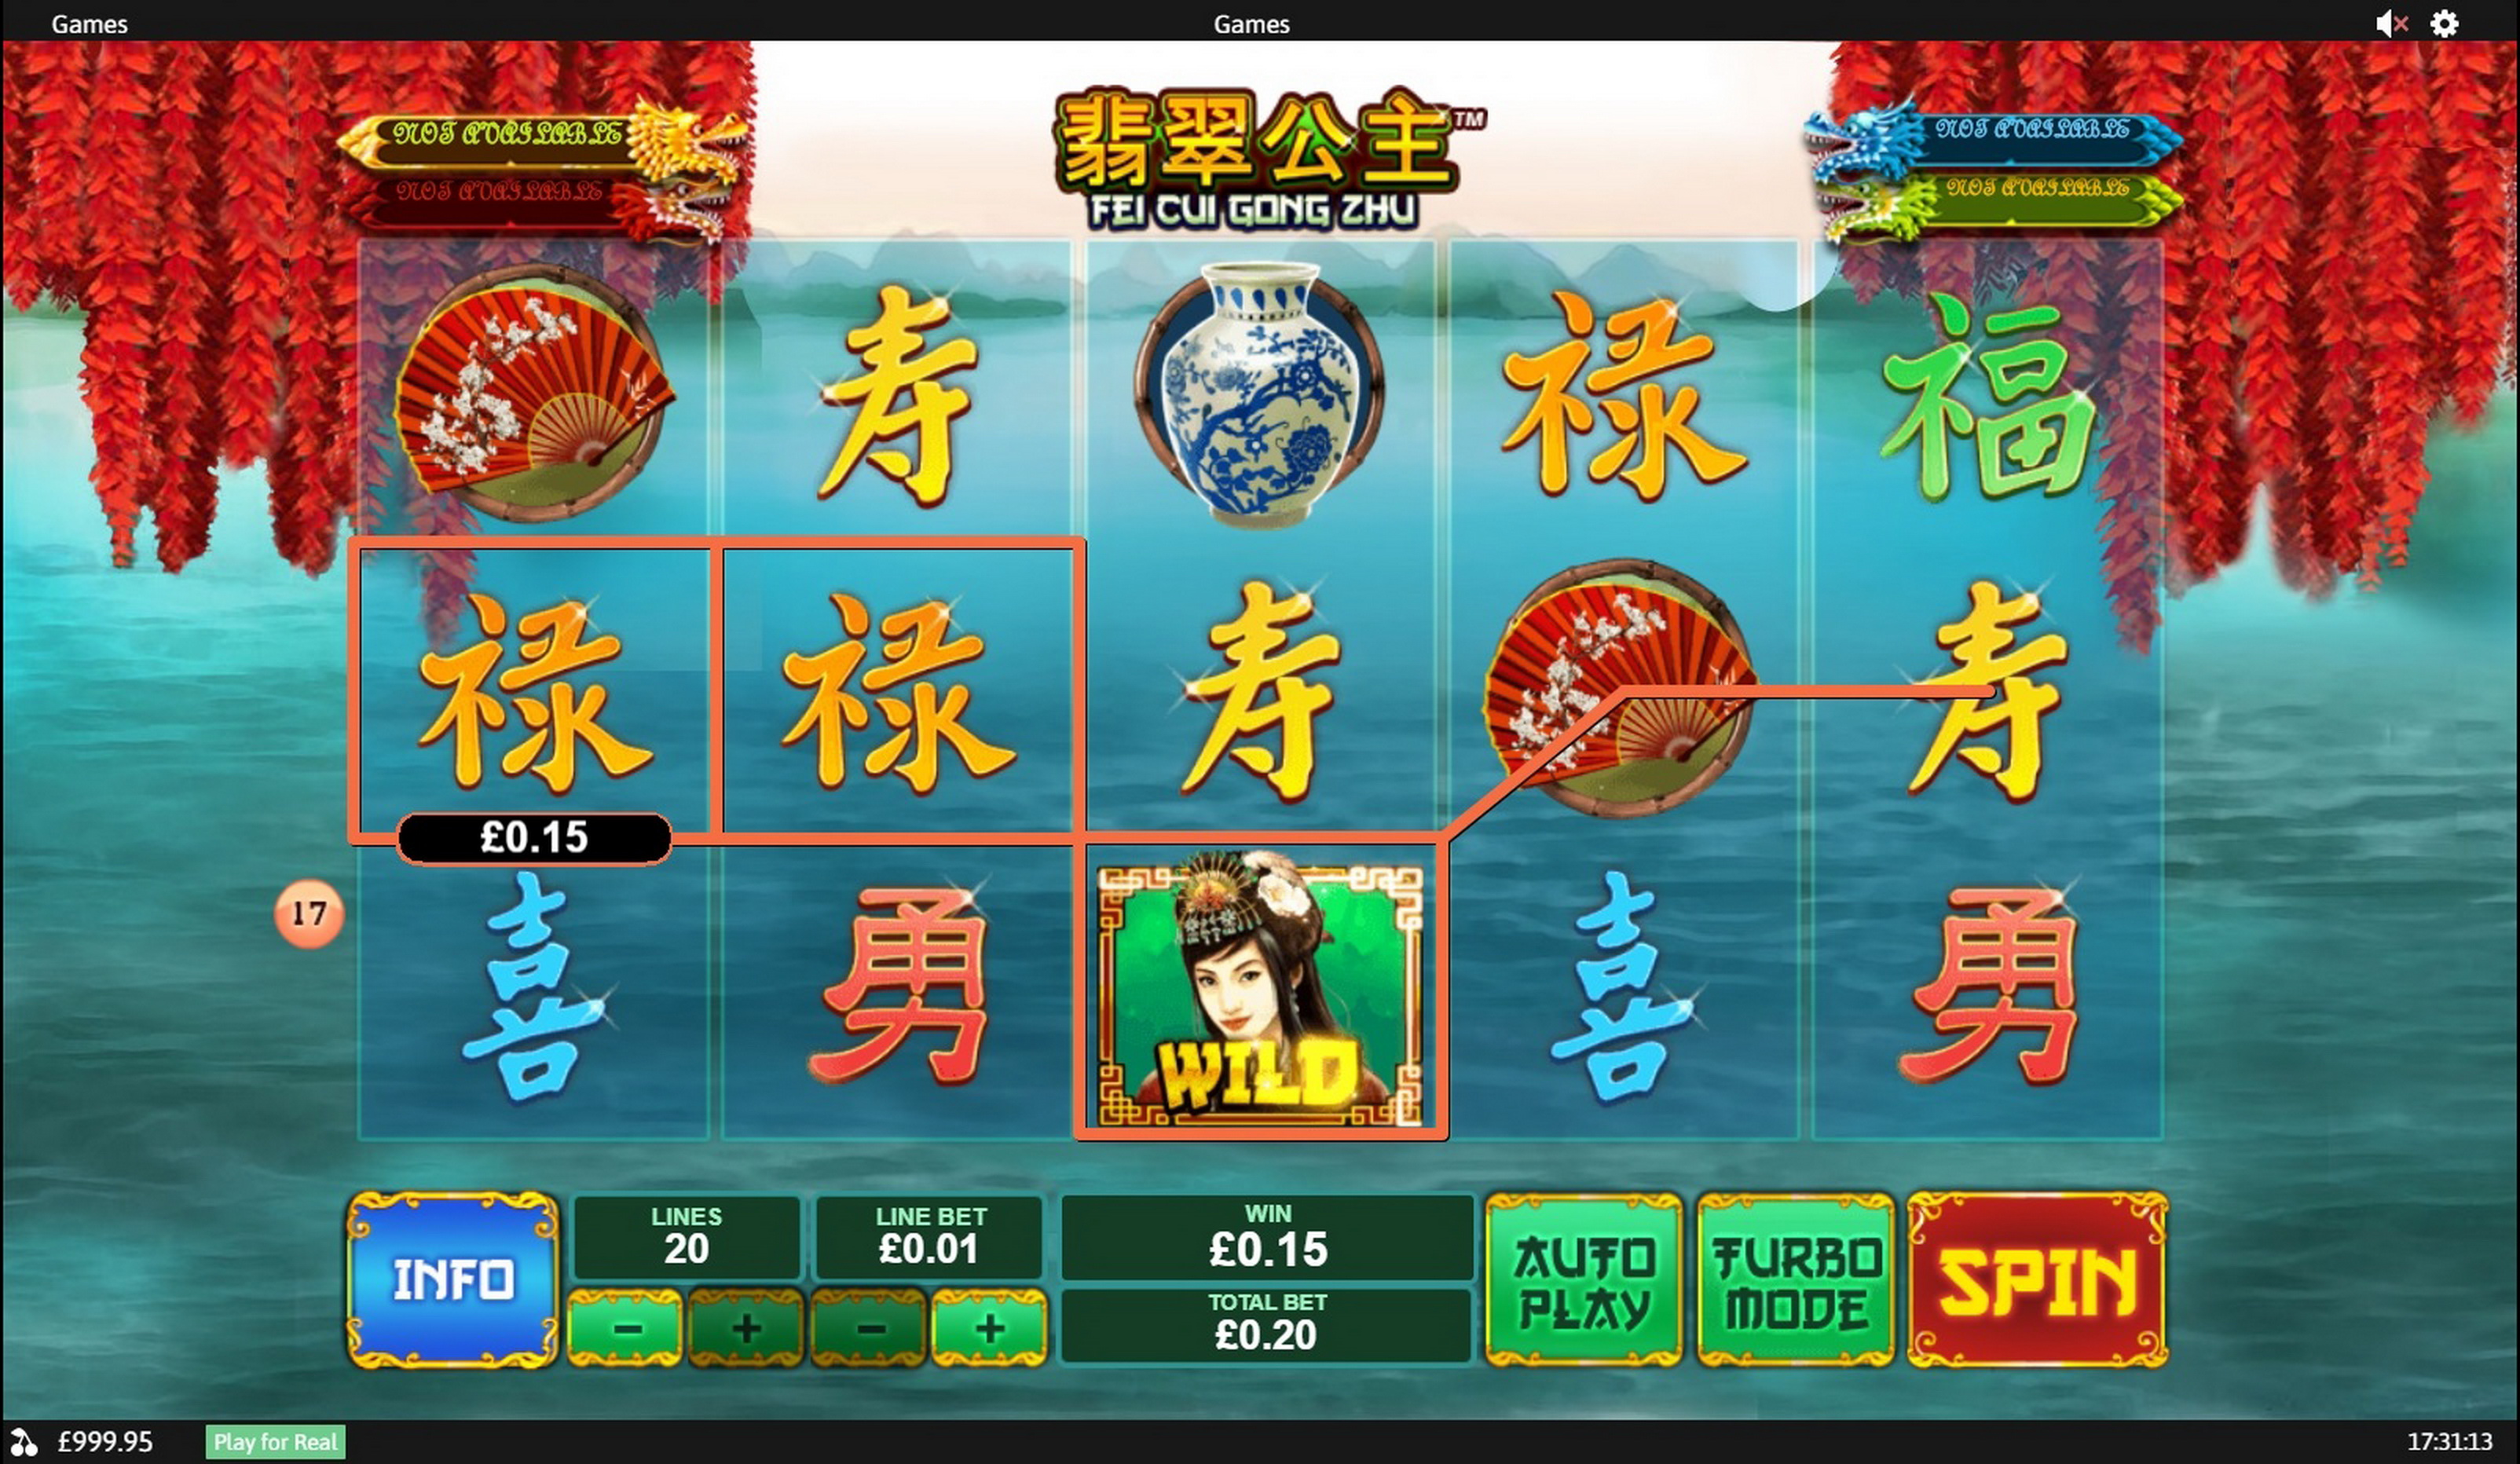 Win Money in Fei Cui Gong Zhu Free Slot Game by Playtech